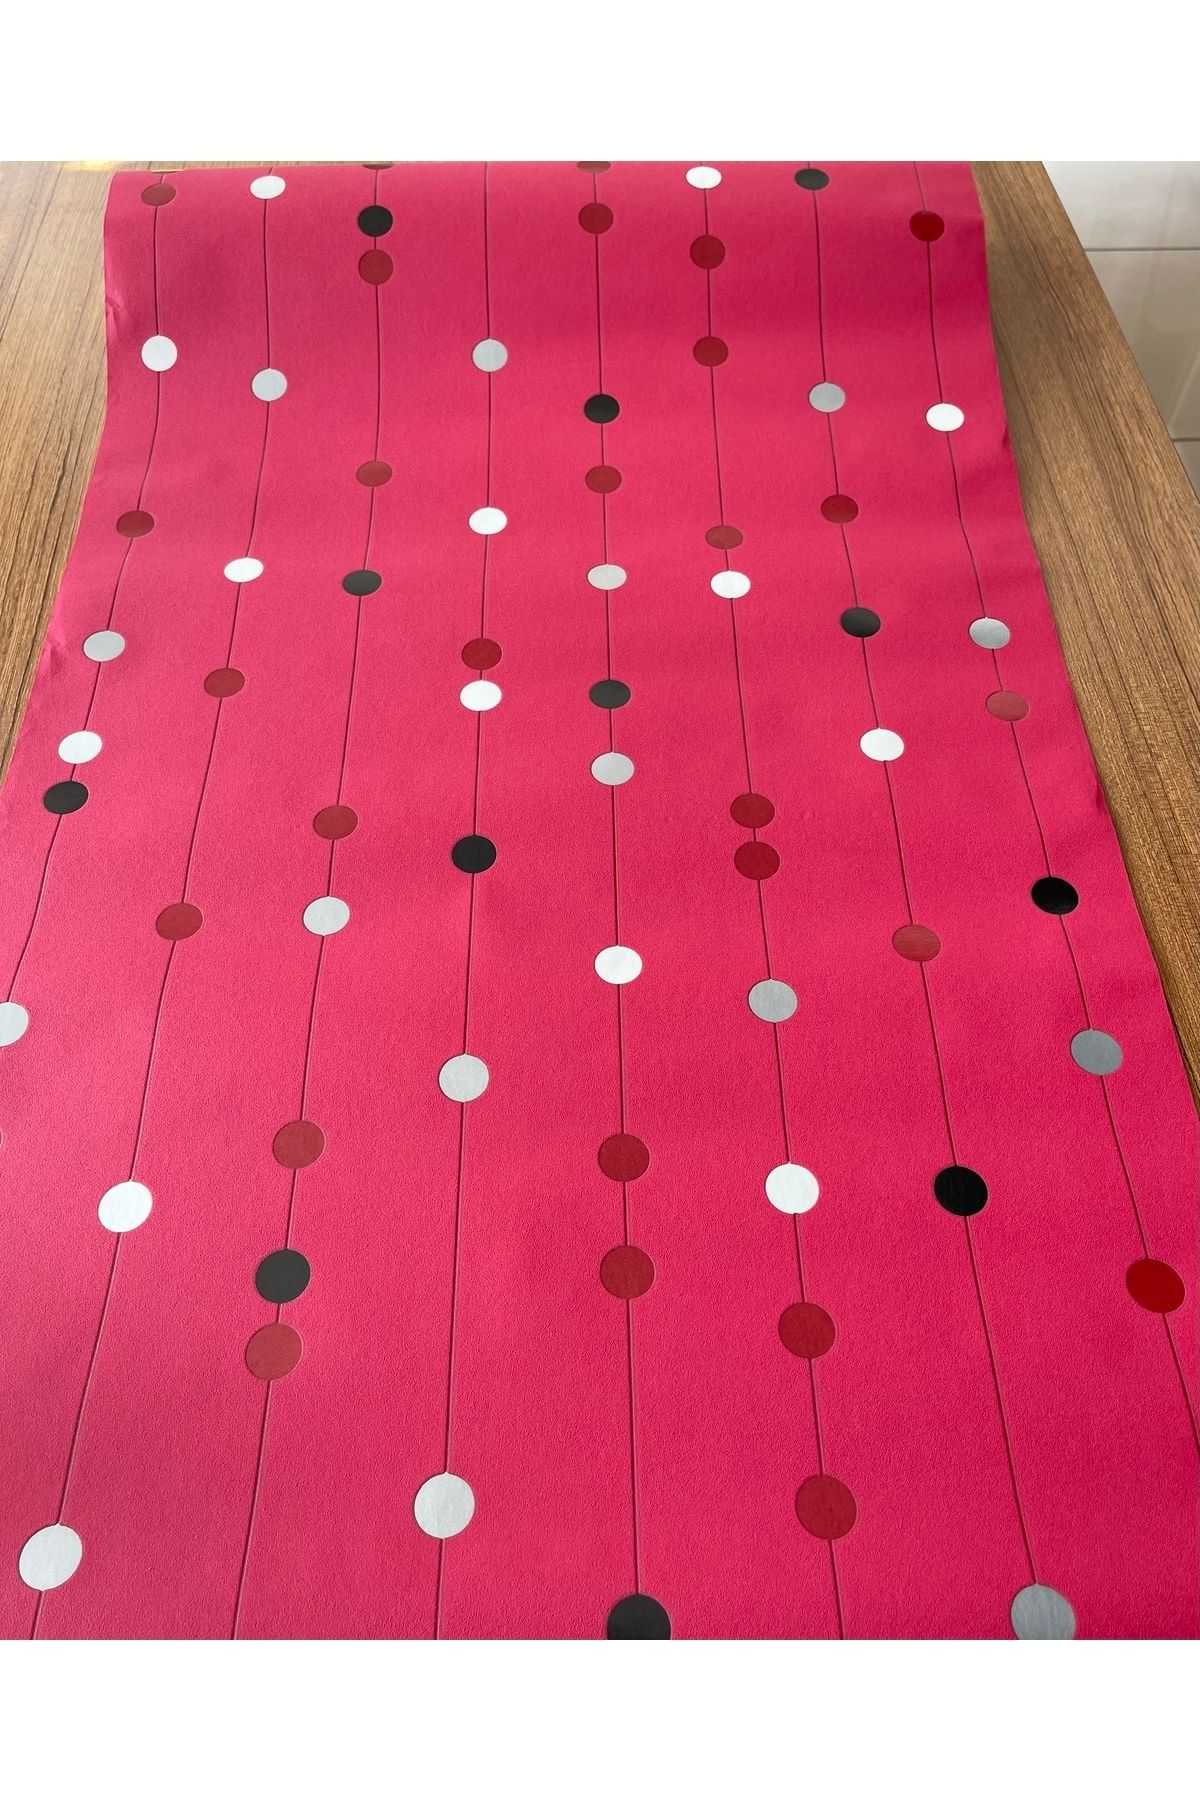 BAŞYAPI DİZAYN Kırmızı Zemin Üzeri Renkli Çizgili Vinly Ithal Duvar Kağıdı (5m²)